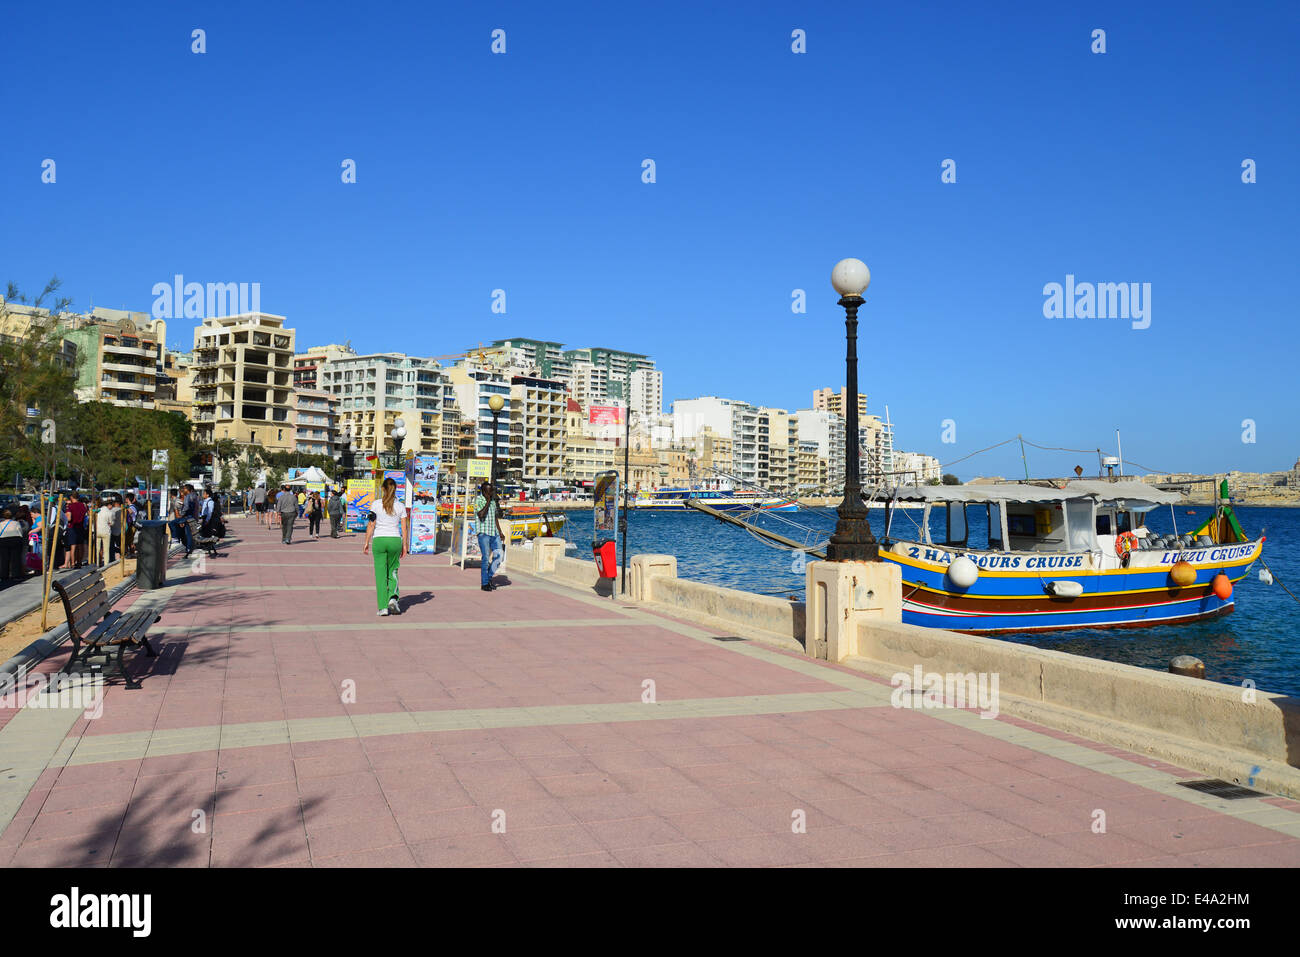 Seafront promenade, Sliema (Tas-Sliema), Northern Harbour District, Malta Xlokk Region, Republic of Malta Stock Photo